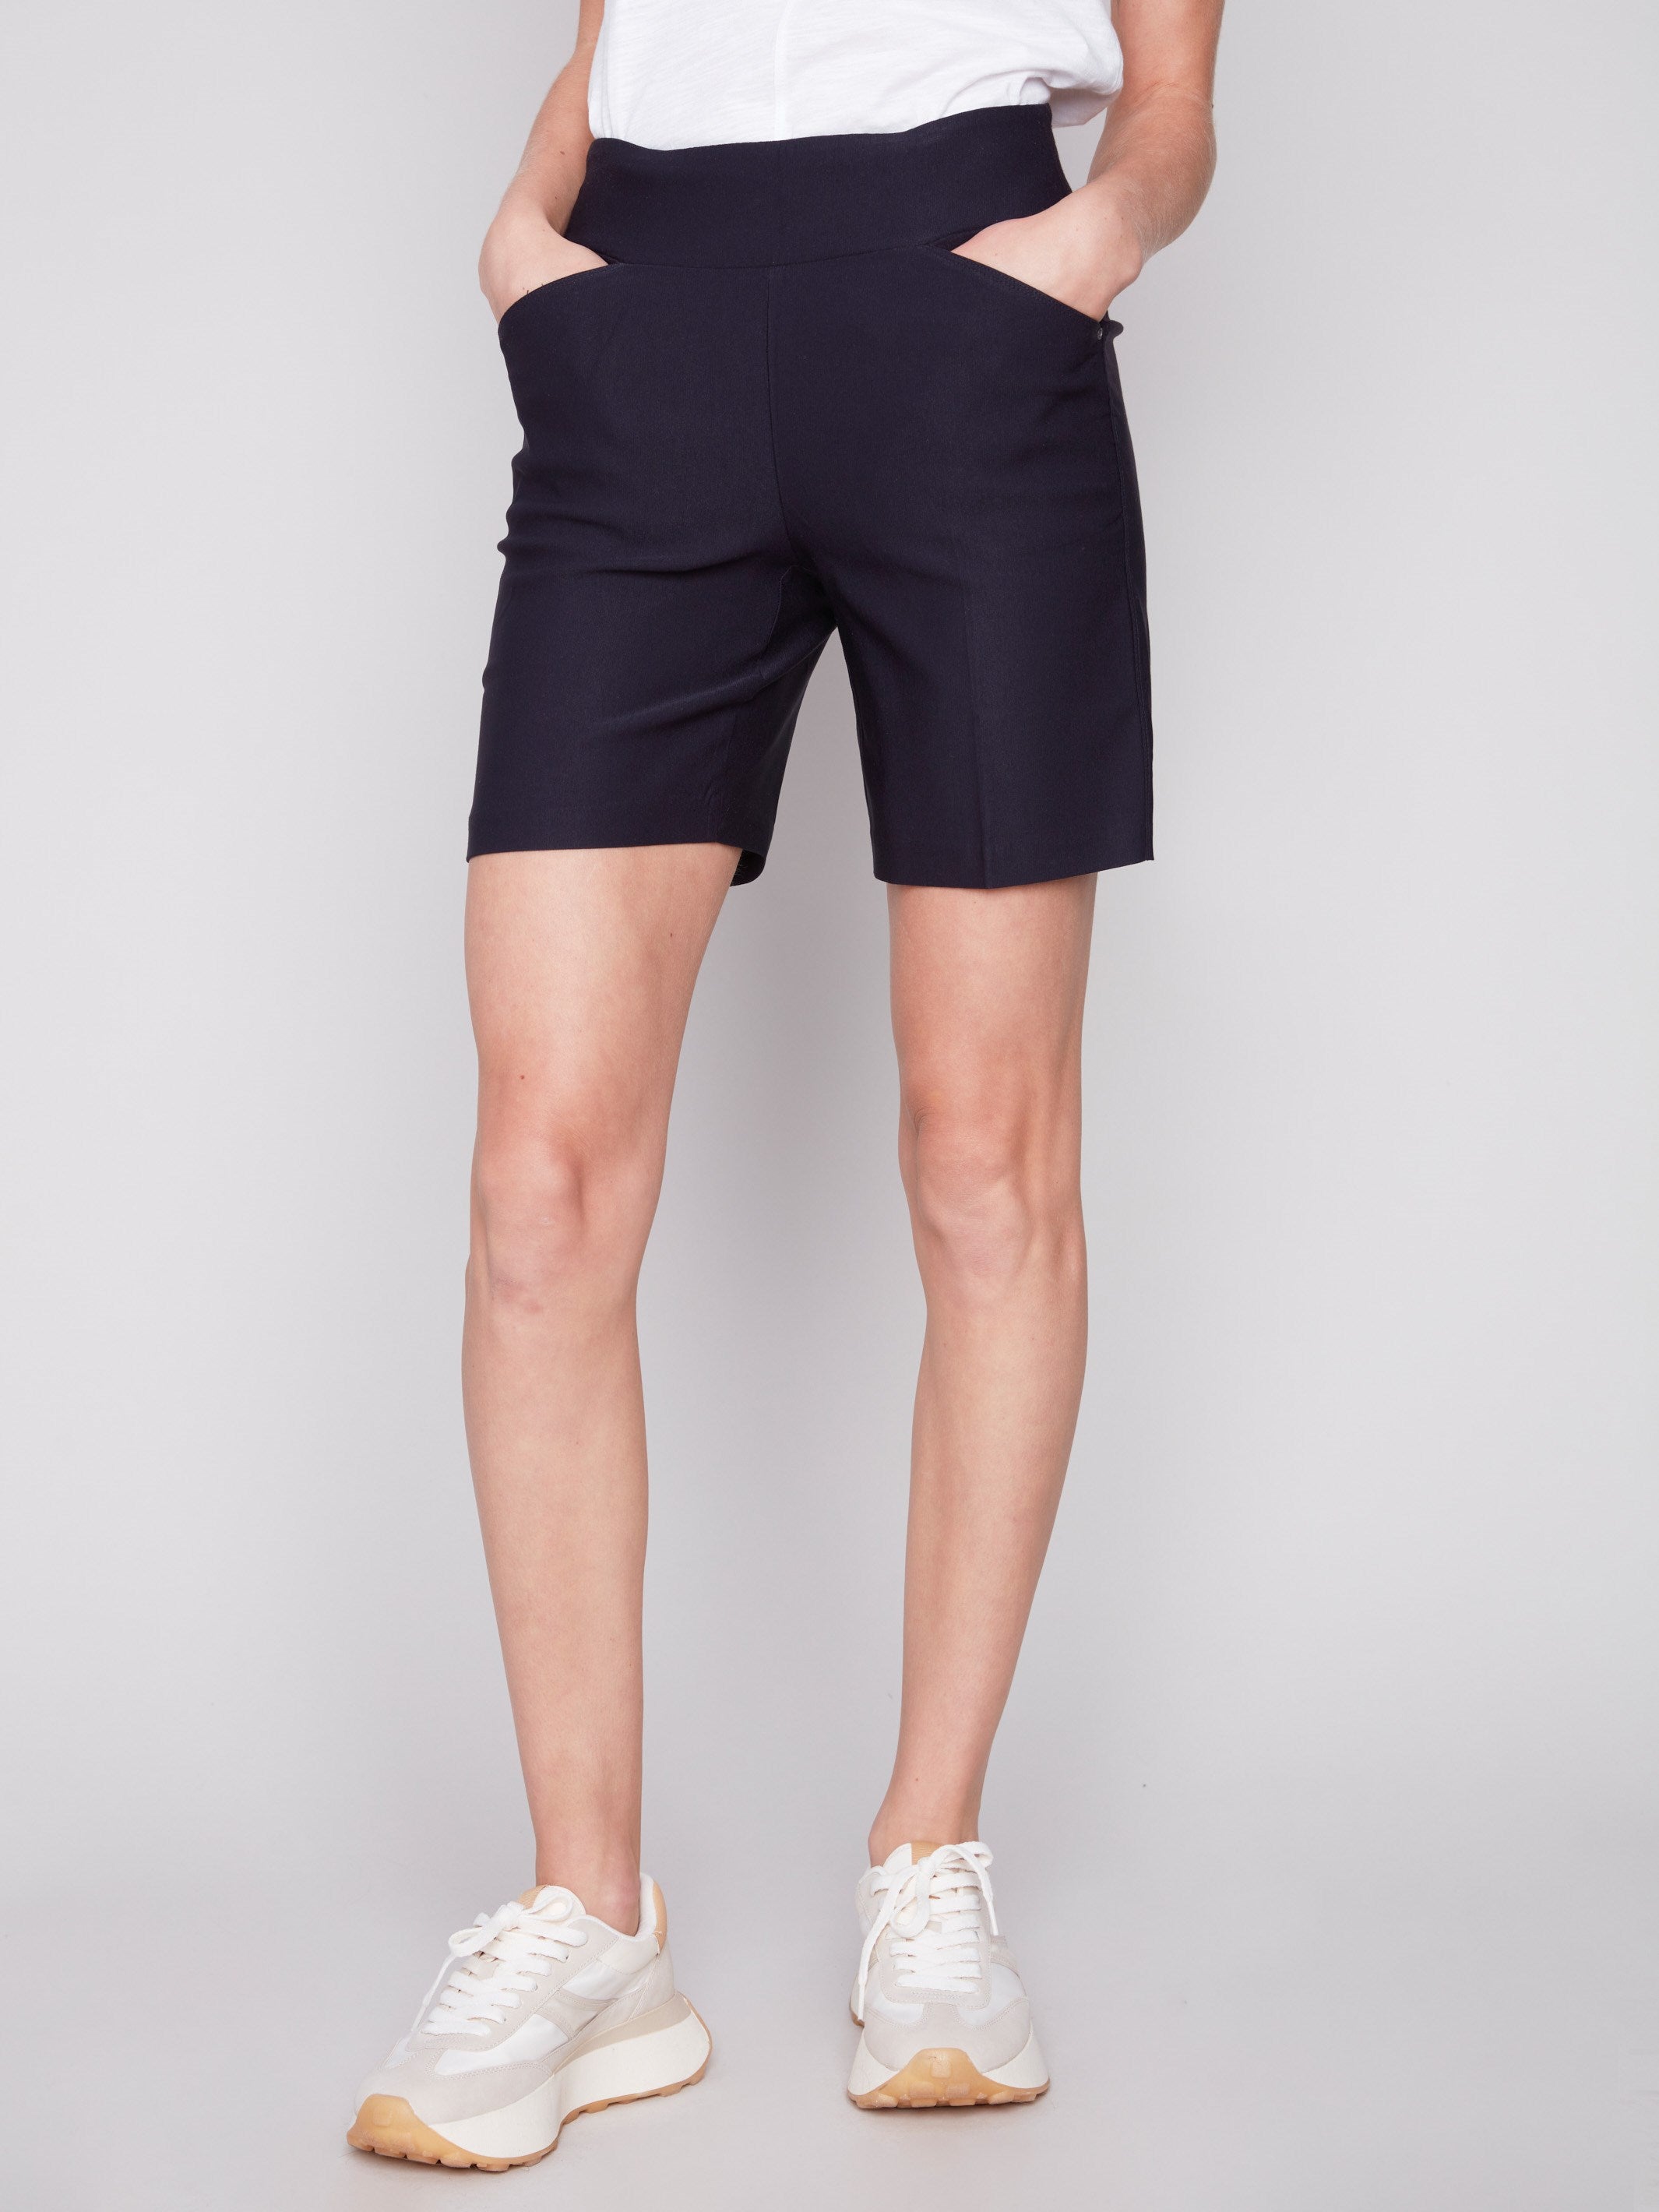 Charlie B Smooth Stretch Shorts - Navy - Image 3